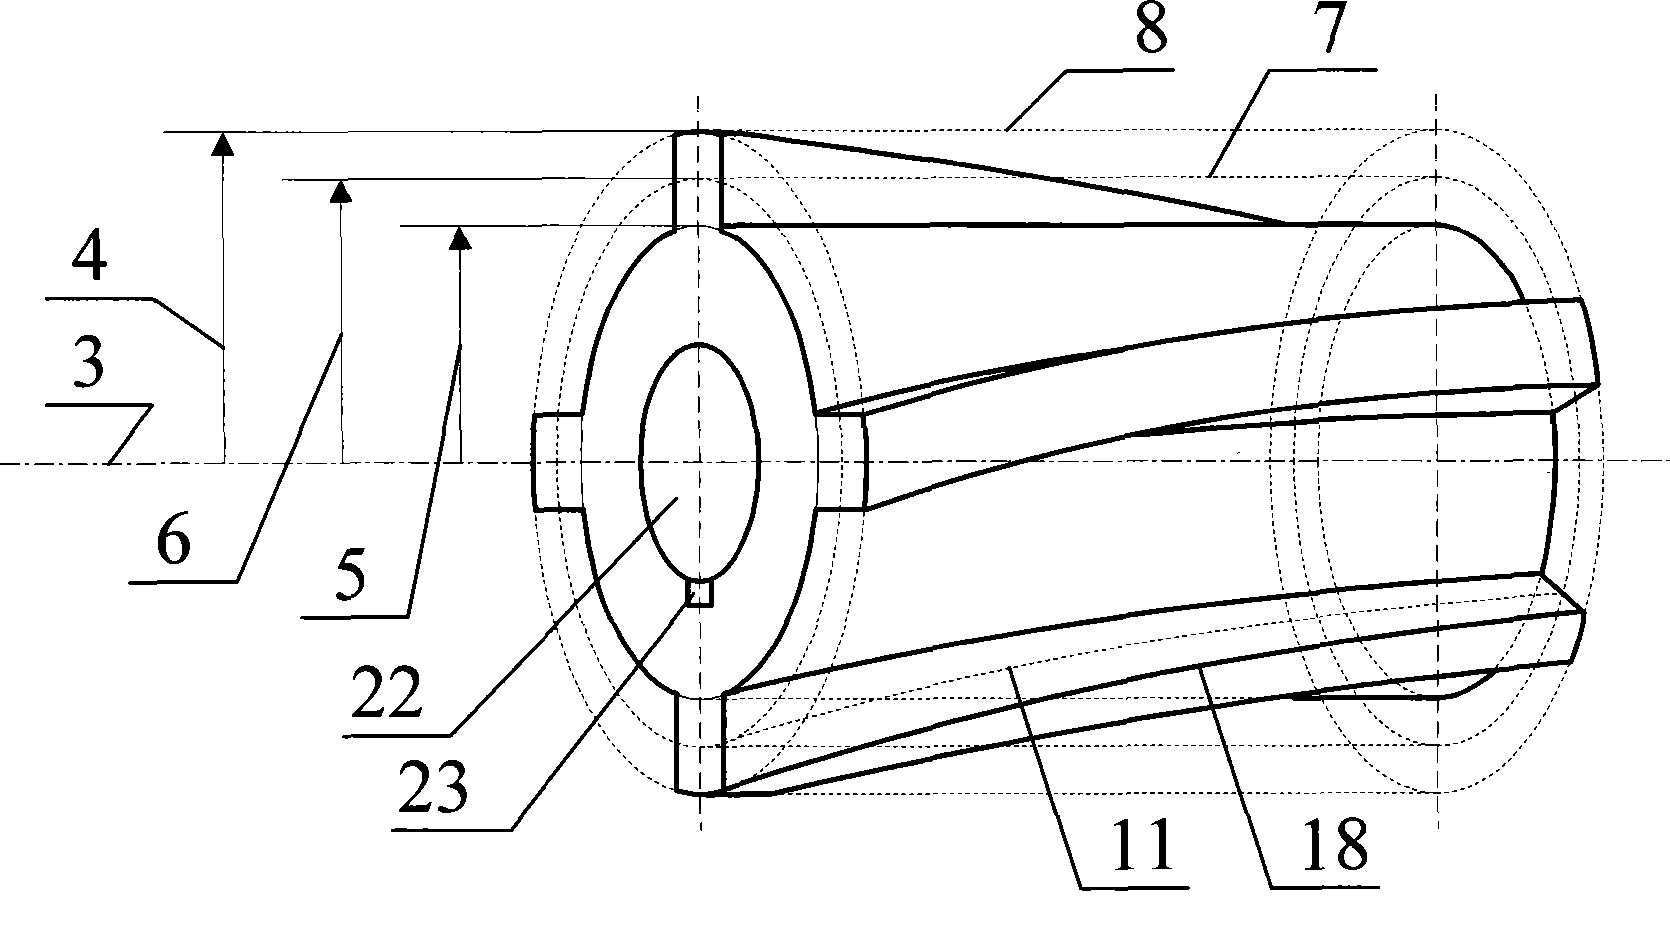 Self-wind cooled rotor low torque ripple magneto resistance genus motor